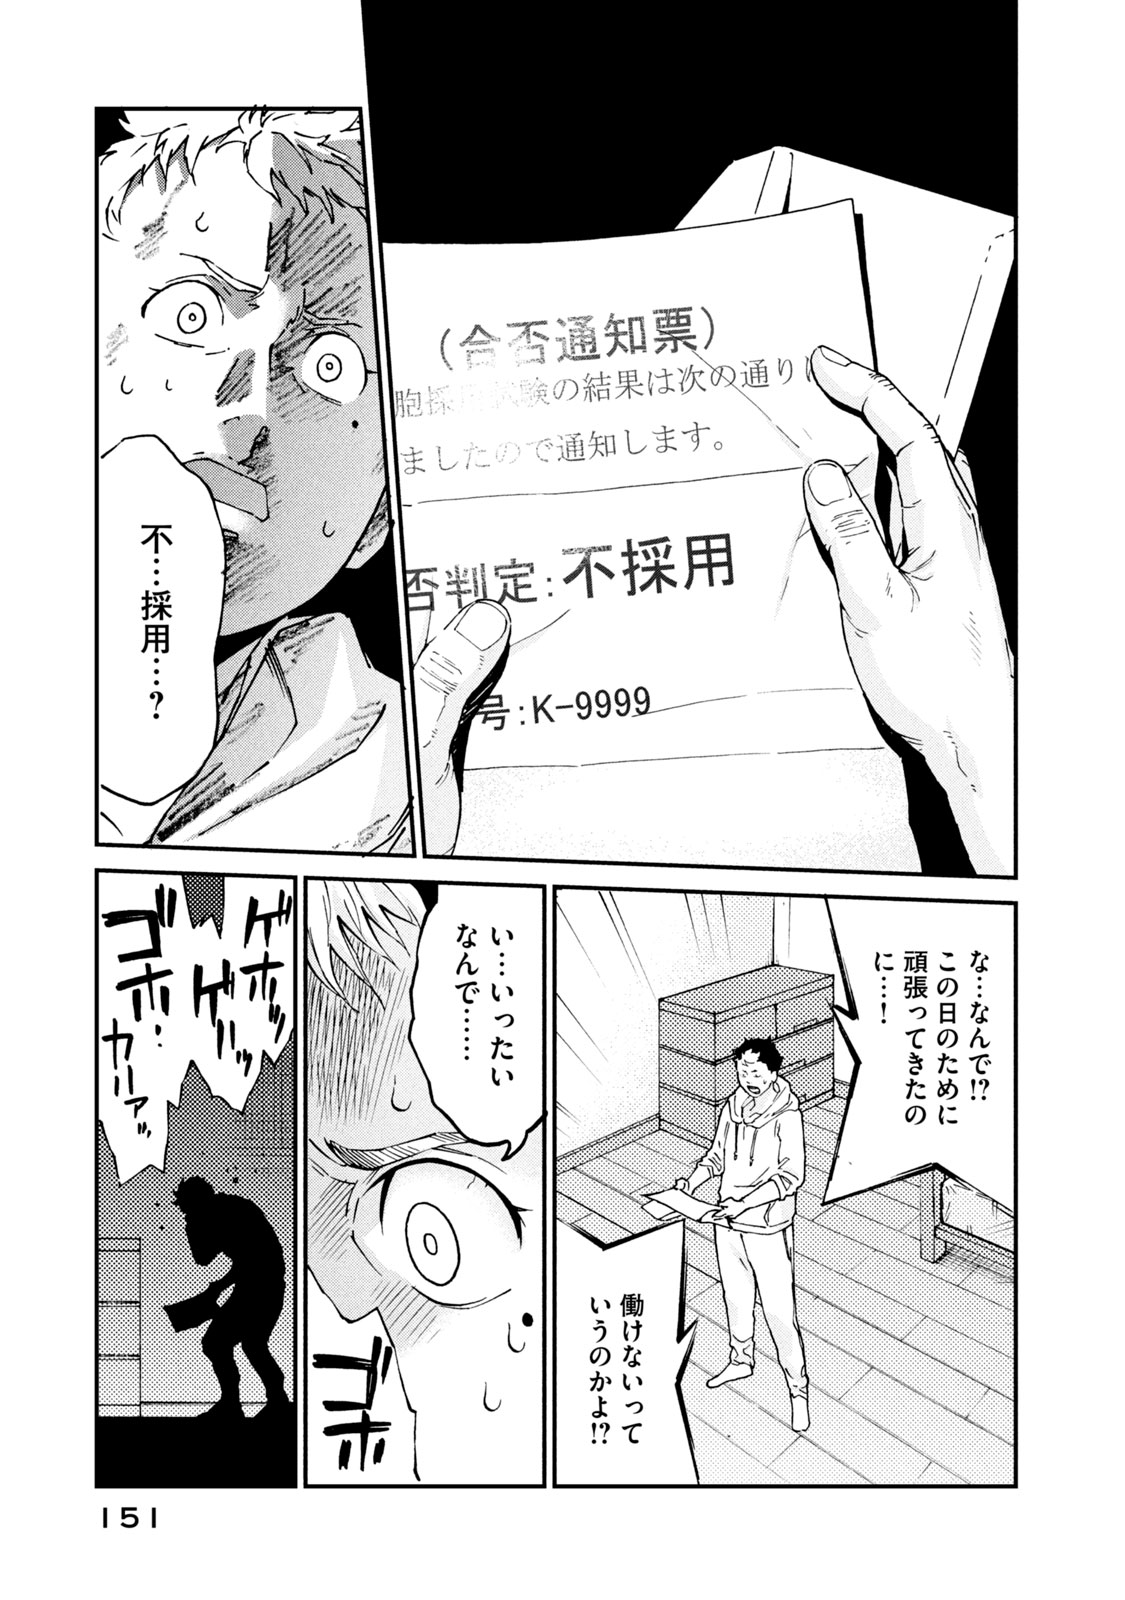 Hataraku Saibou BLACK - Chapter 36 - Page 29